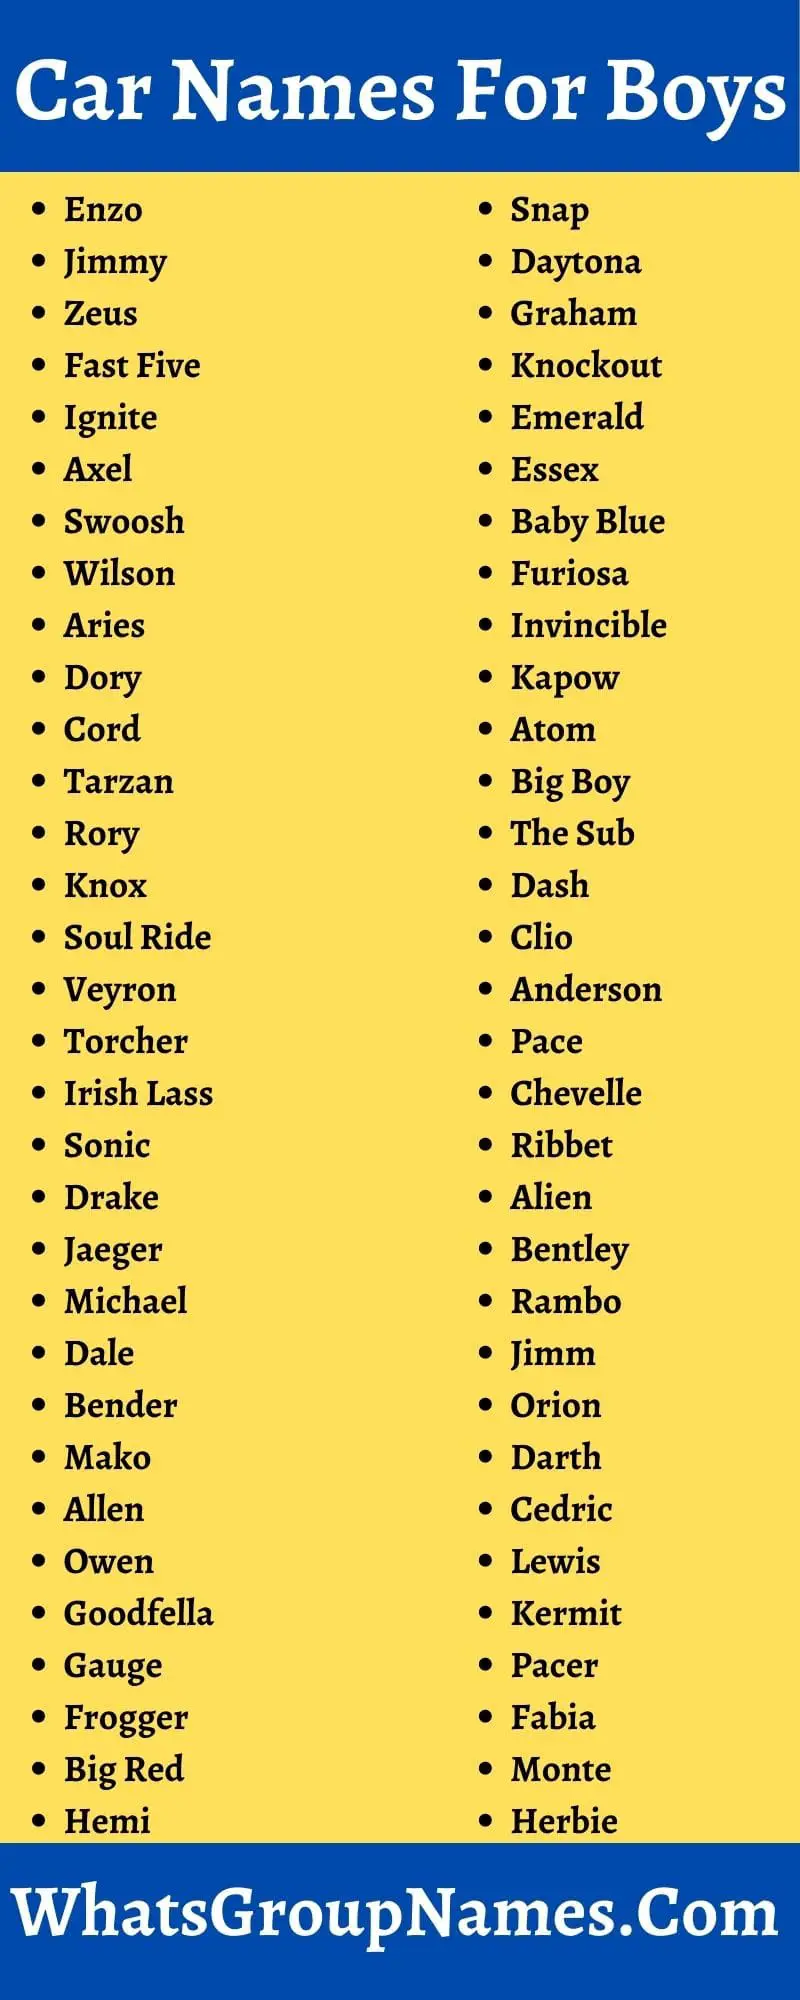 Car Names For Boys